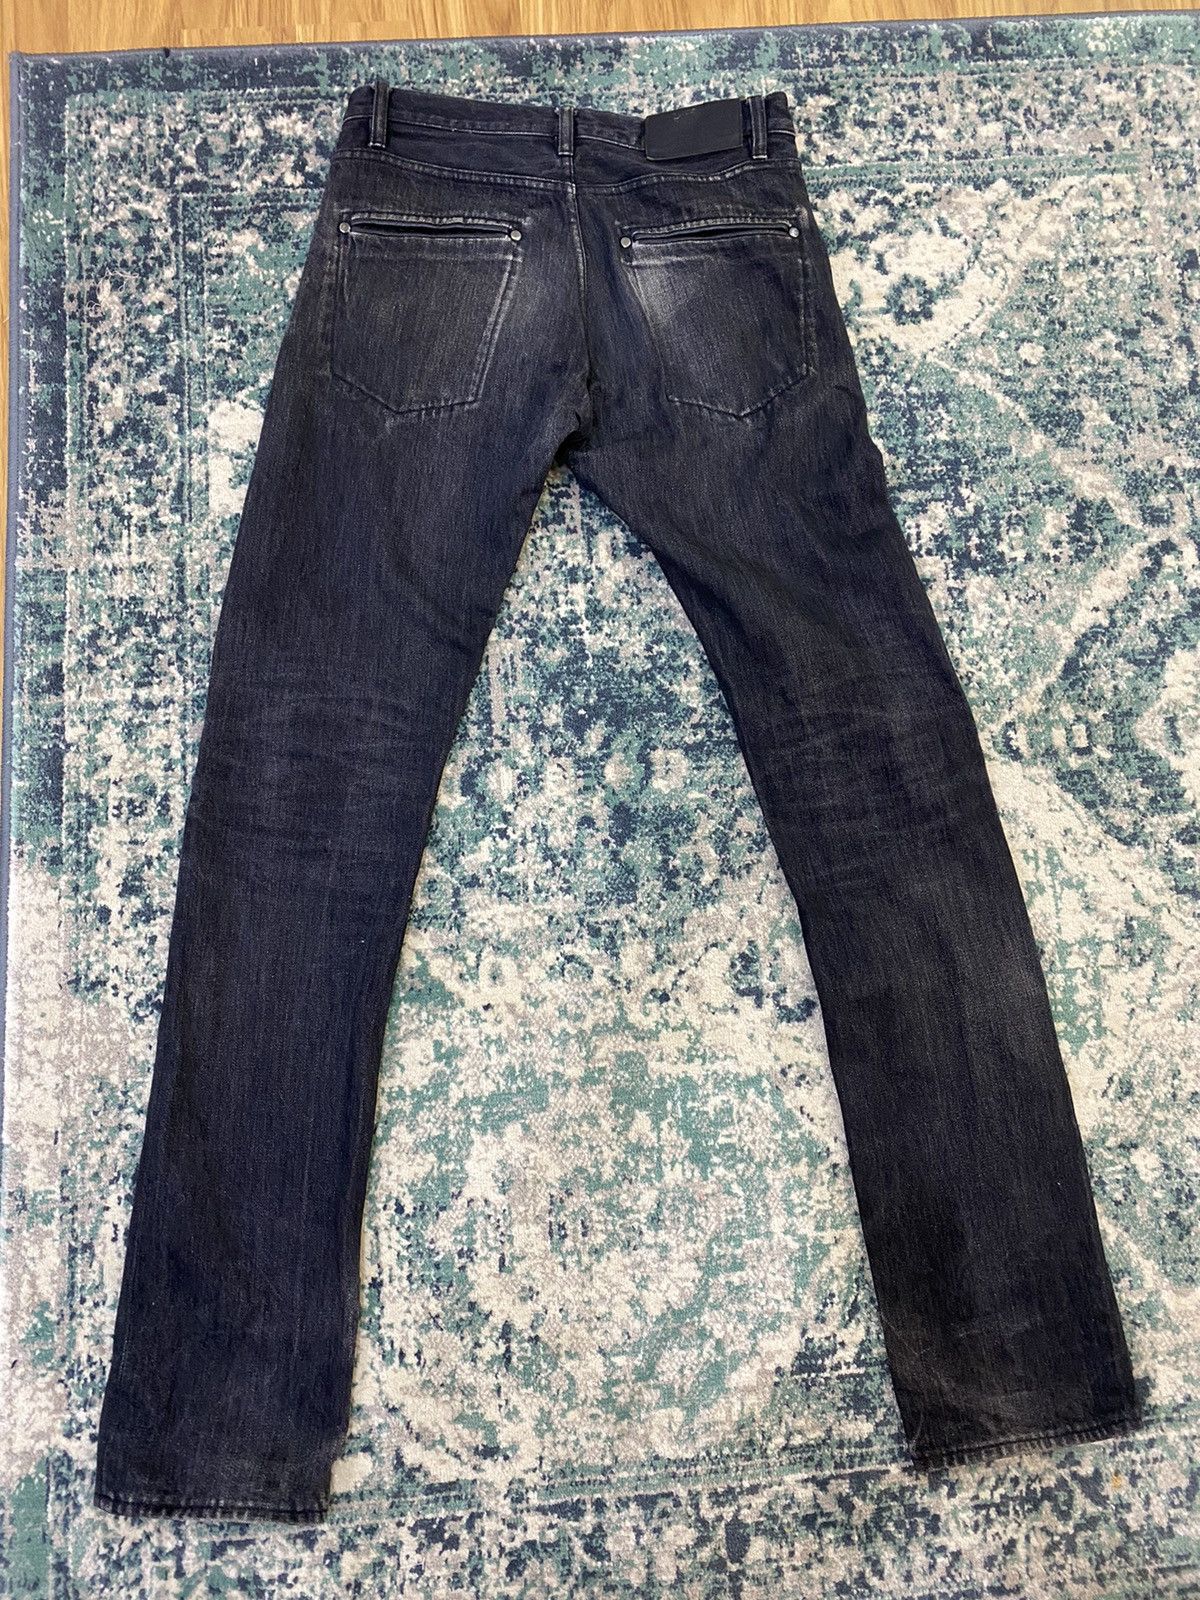 Lemaire Black Leather Lining Pocket Jeans - 11